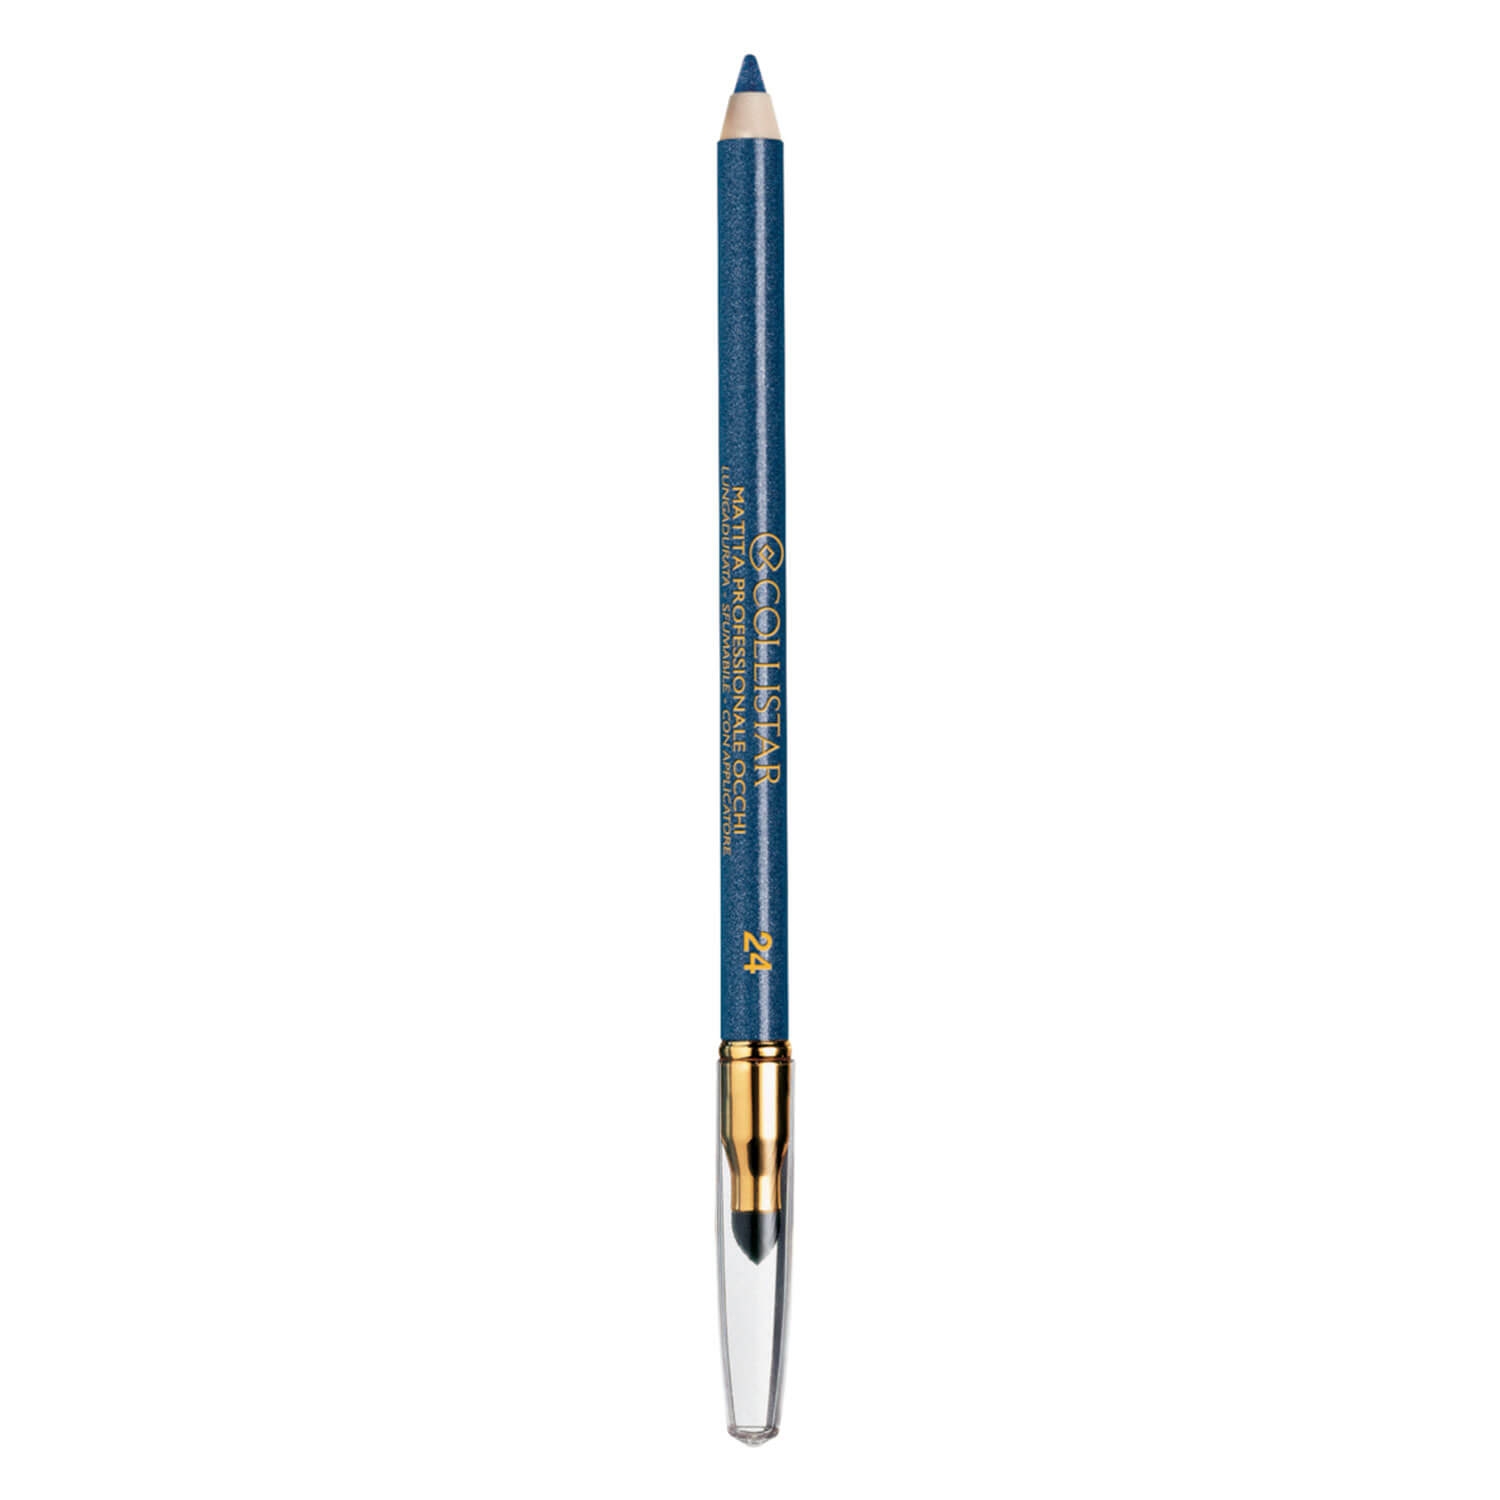 Produktbild von CS Eyes - Professional Eye Pencil Glitter 24 deep blue